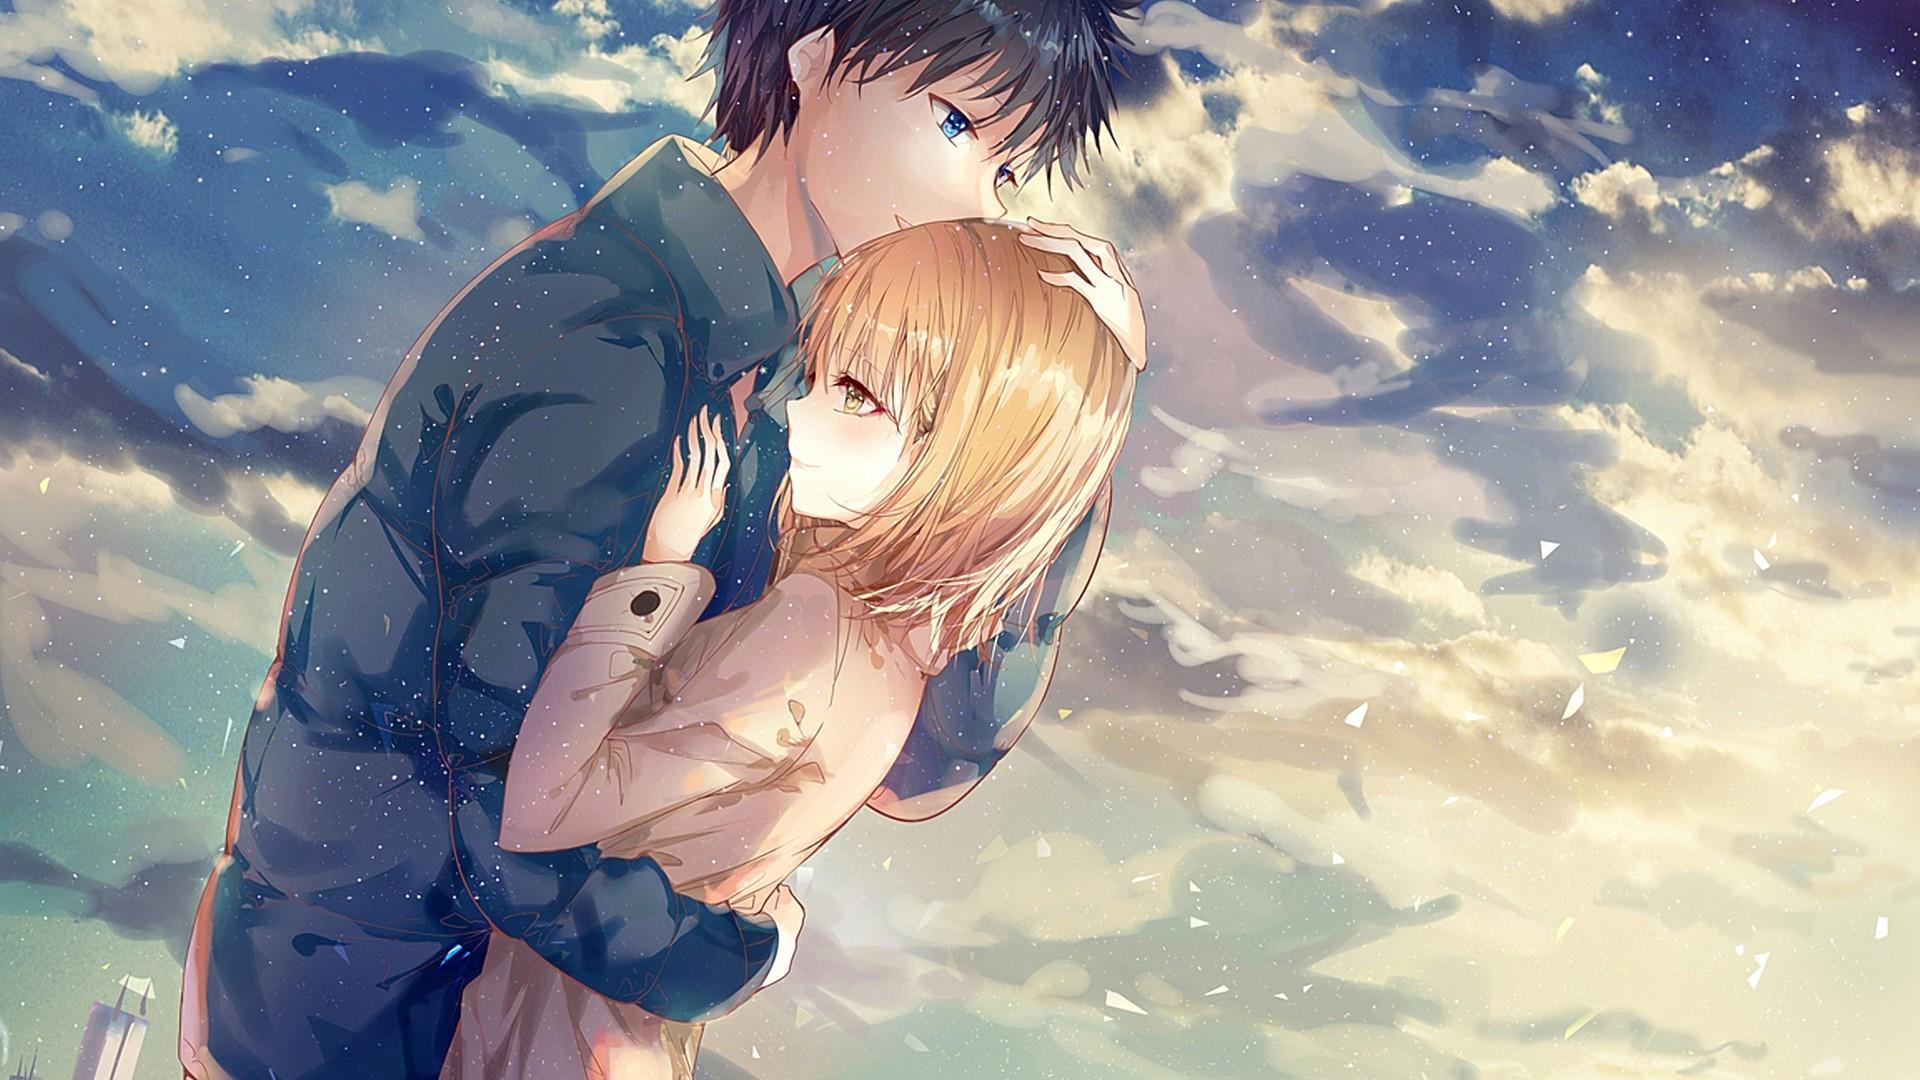 Download 1920x1080 Anime Couple, Hug, Romance, Clouds